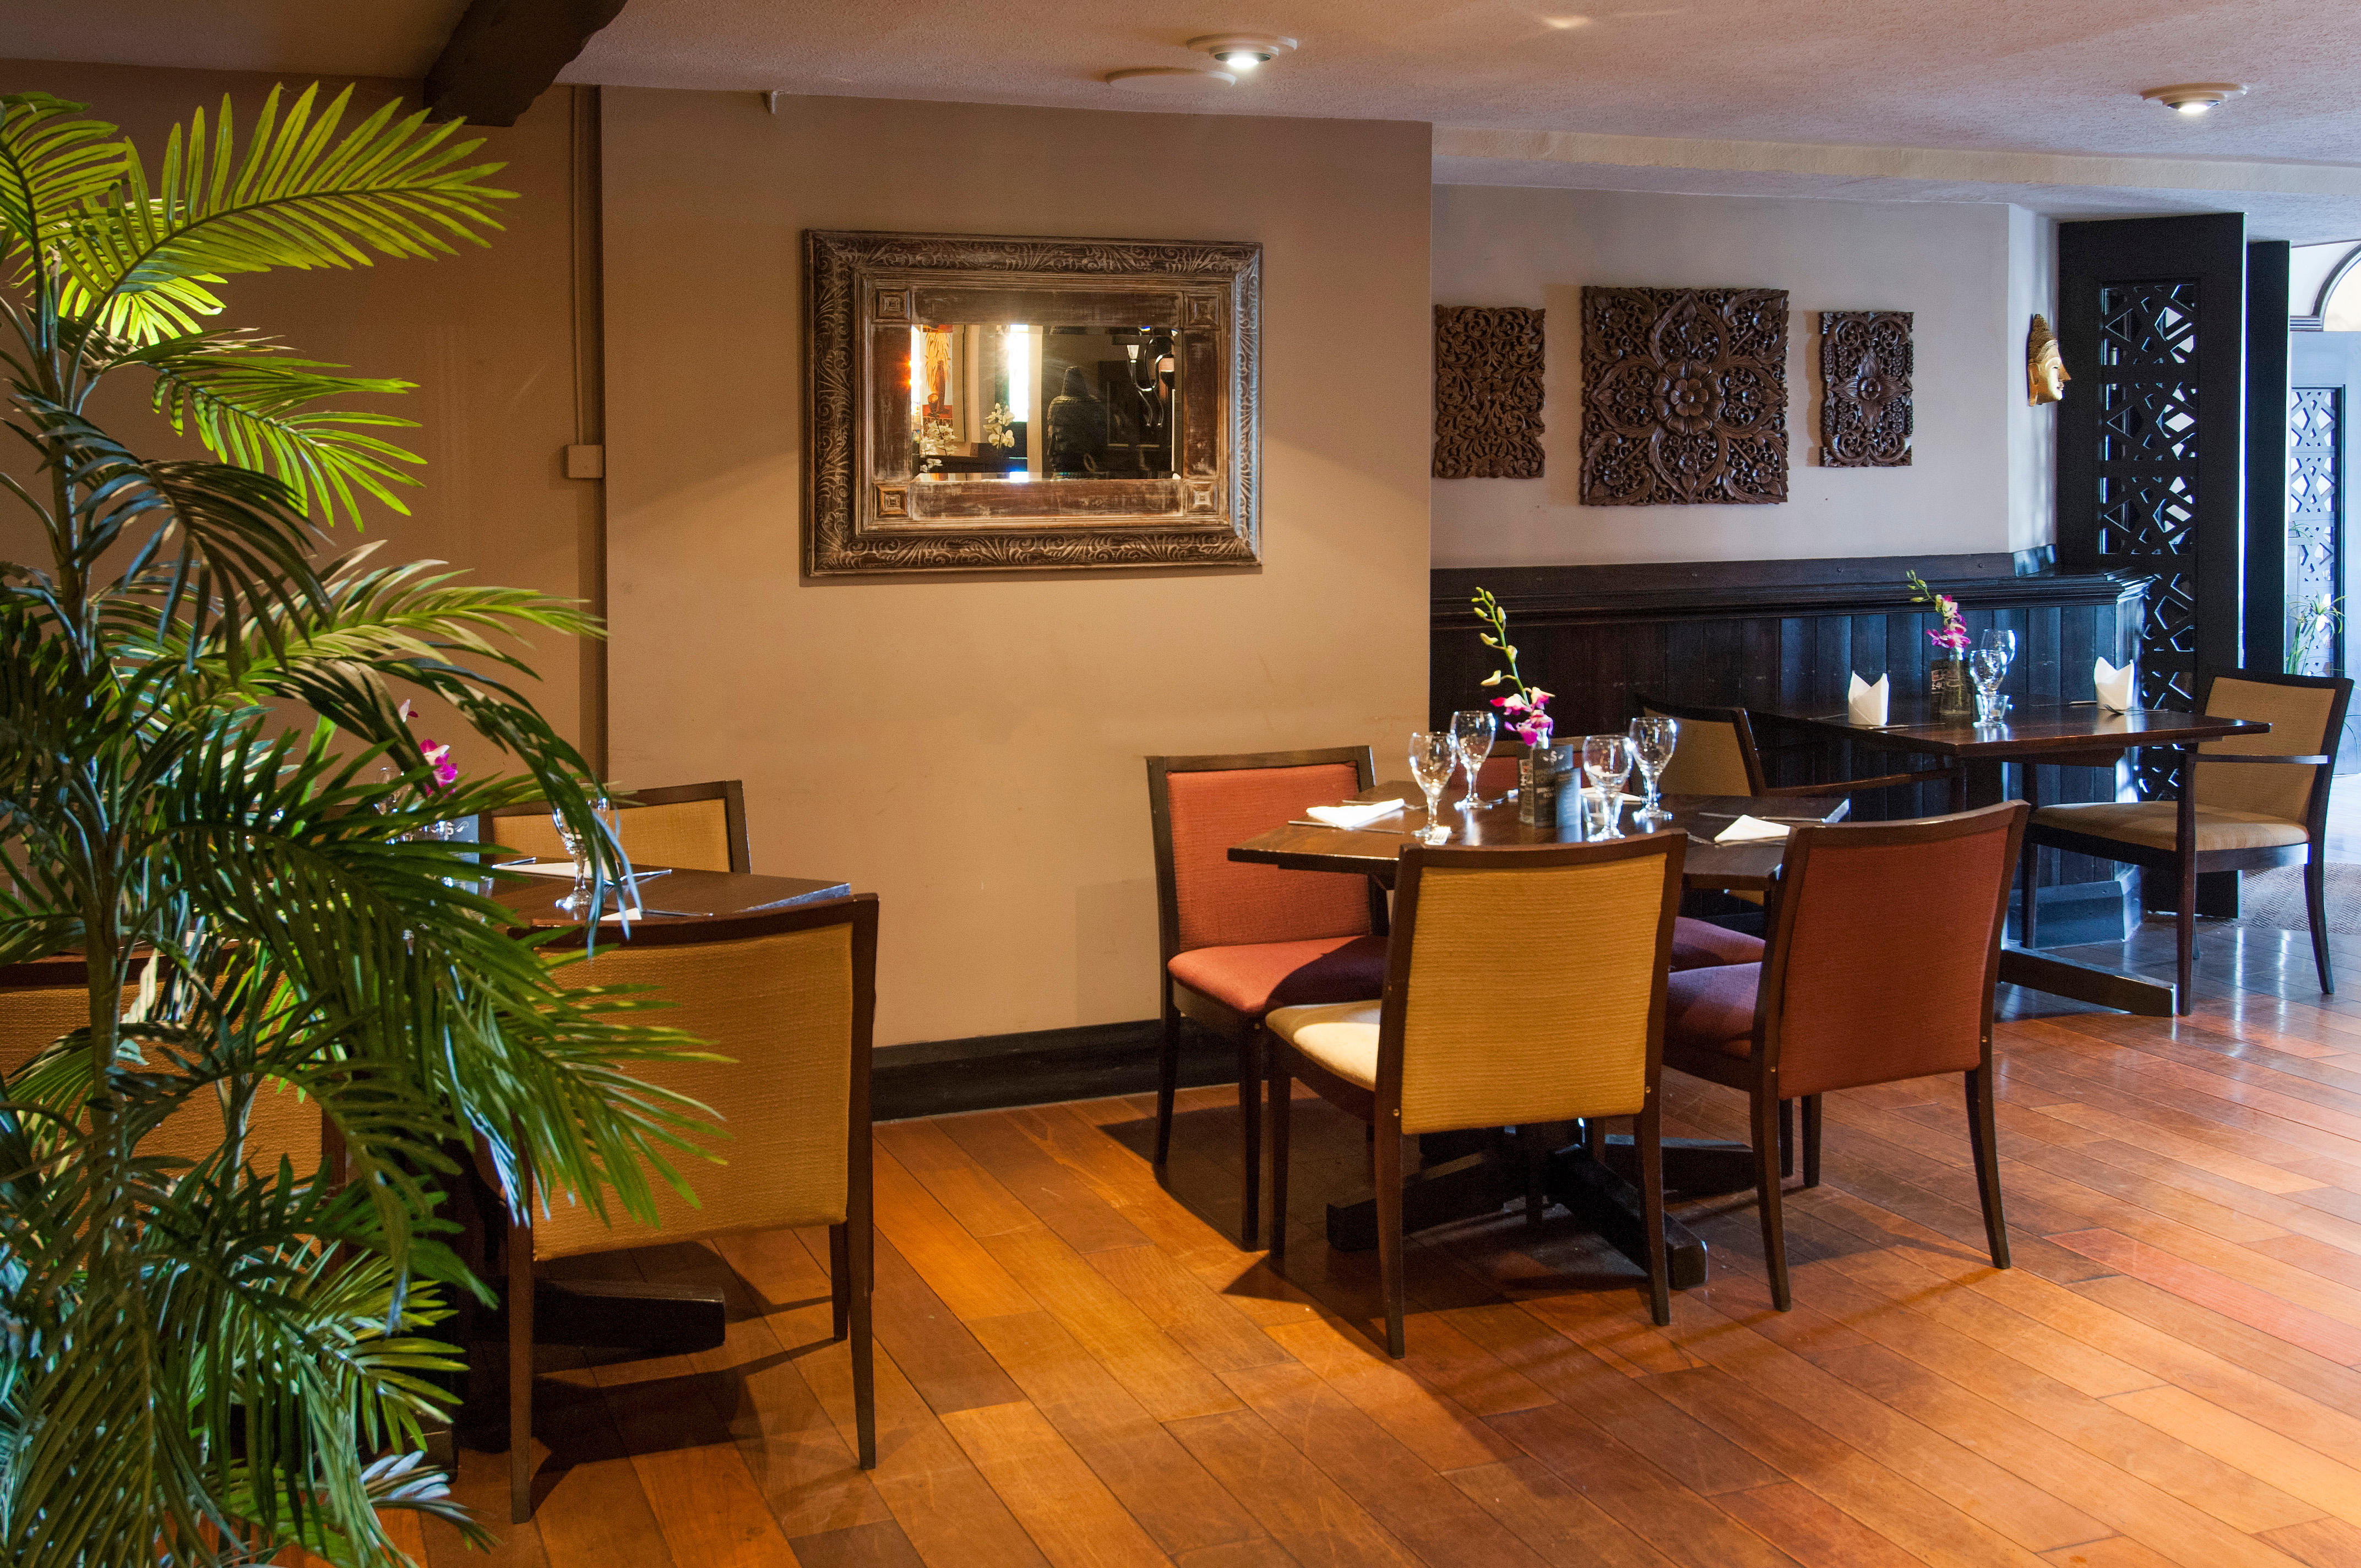 Breakfast Room restaurant Premier Inn Leeds East hotel Leeds 03330 035074